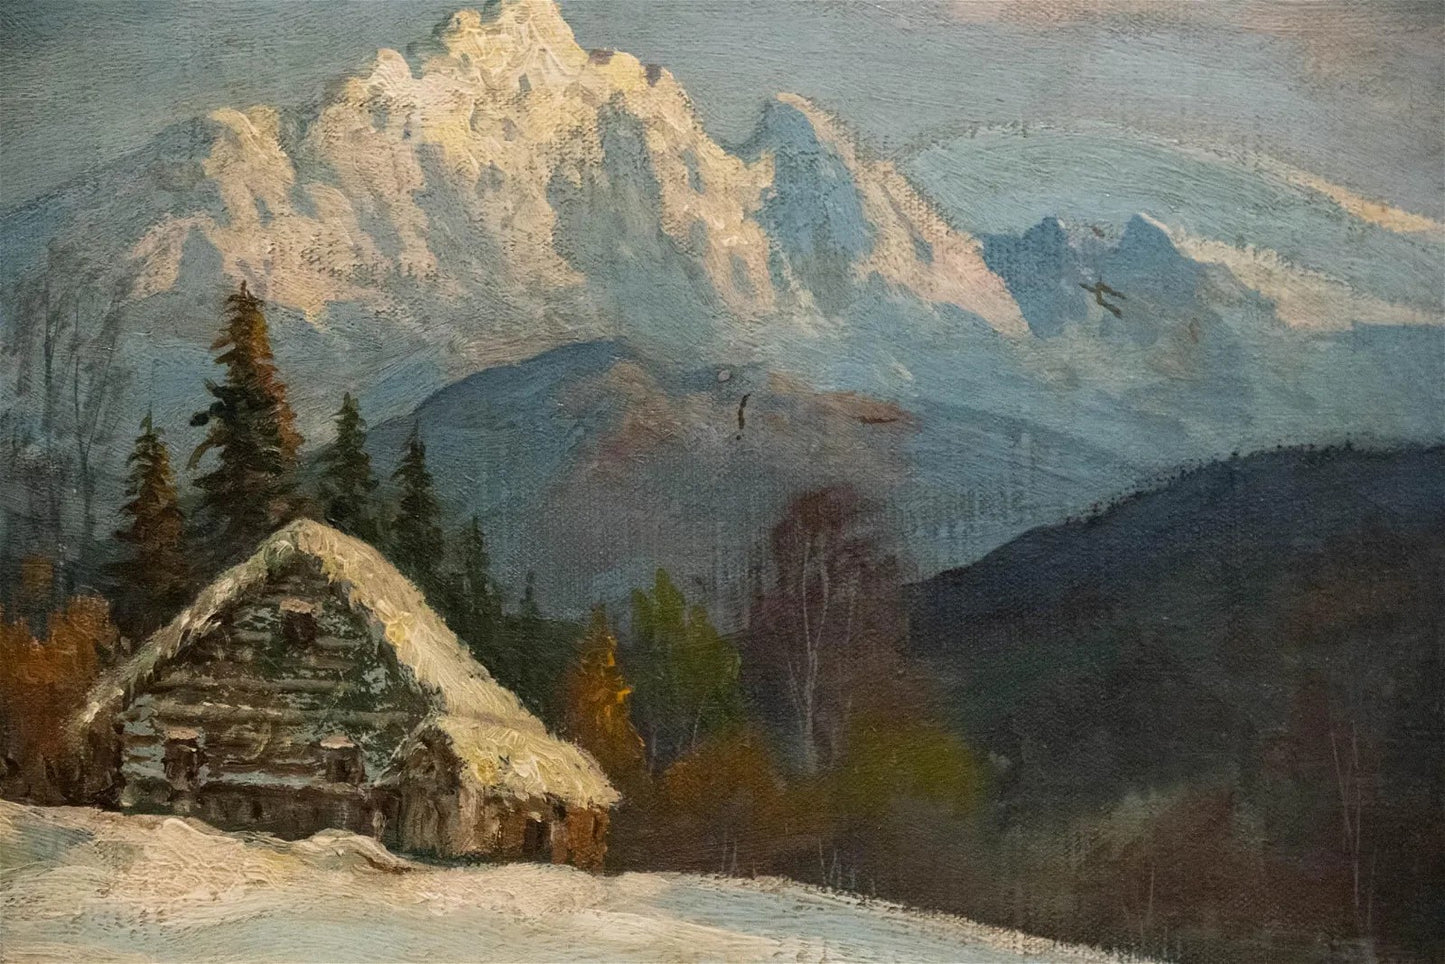 Sydney Mortimer Laurence - Winter's Silence, Alaska 20" x 23"